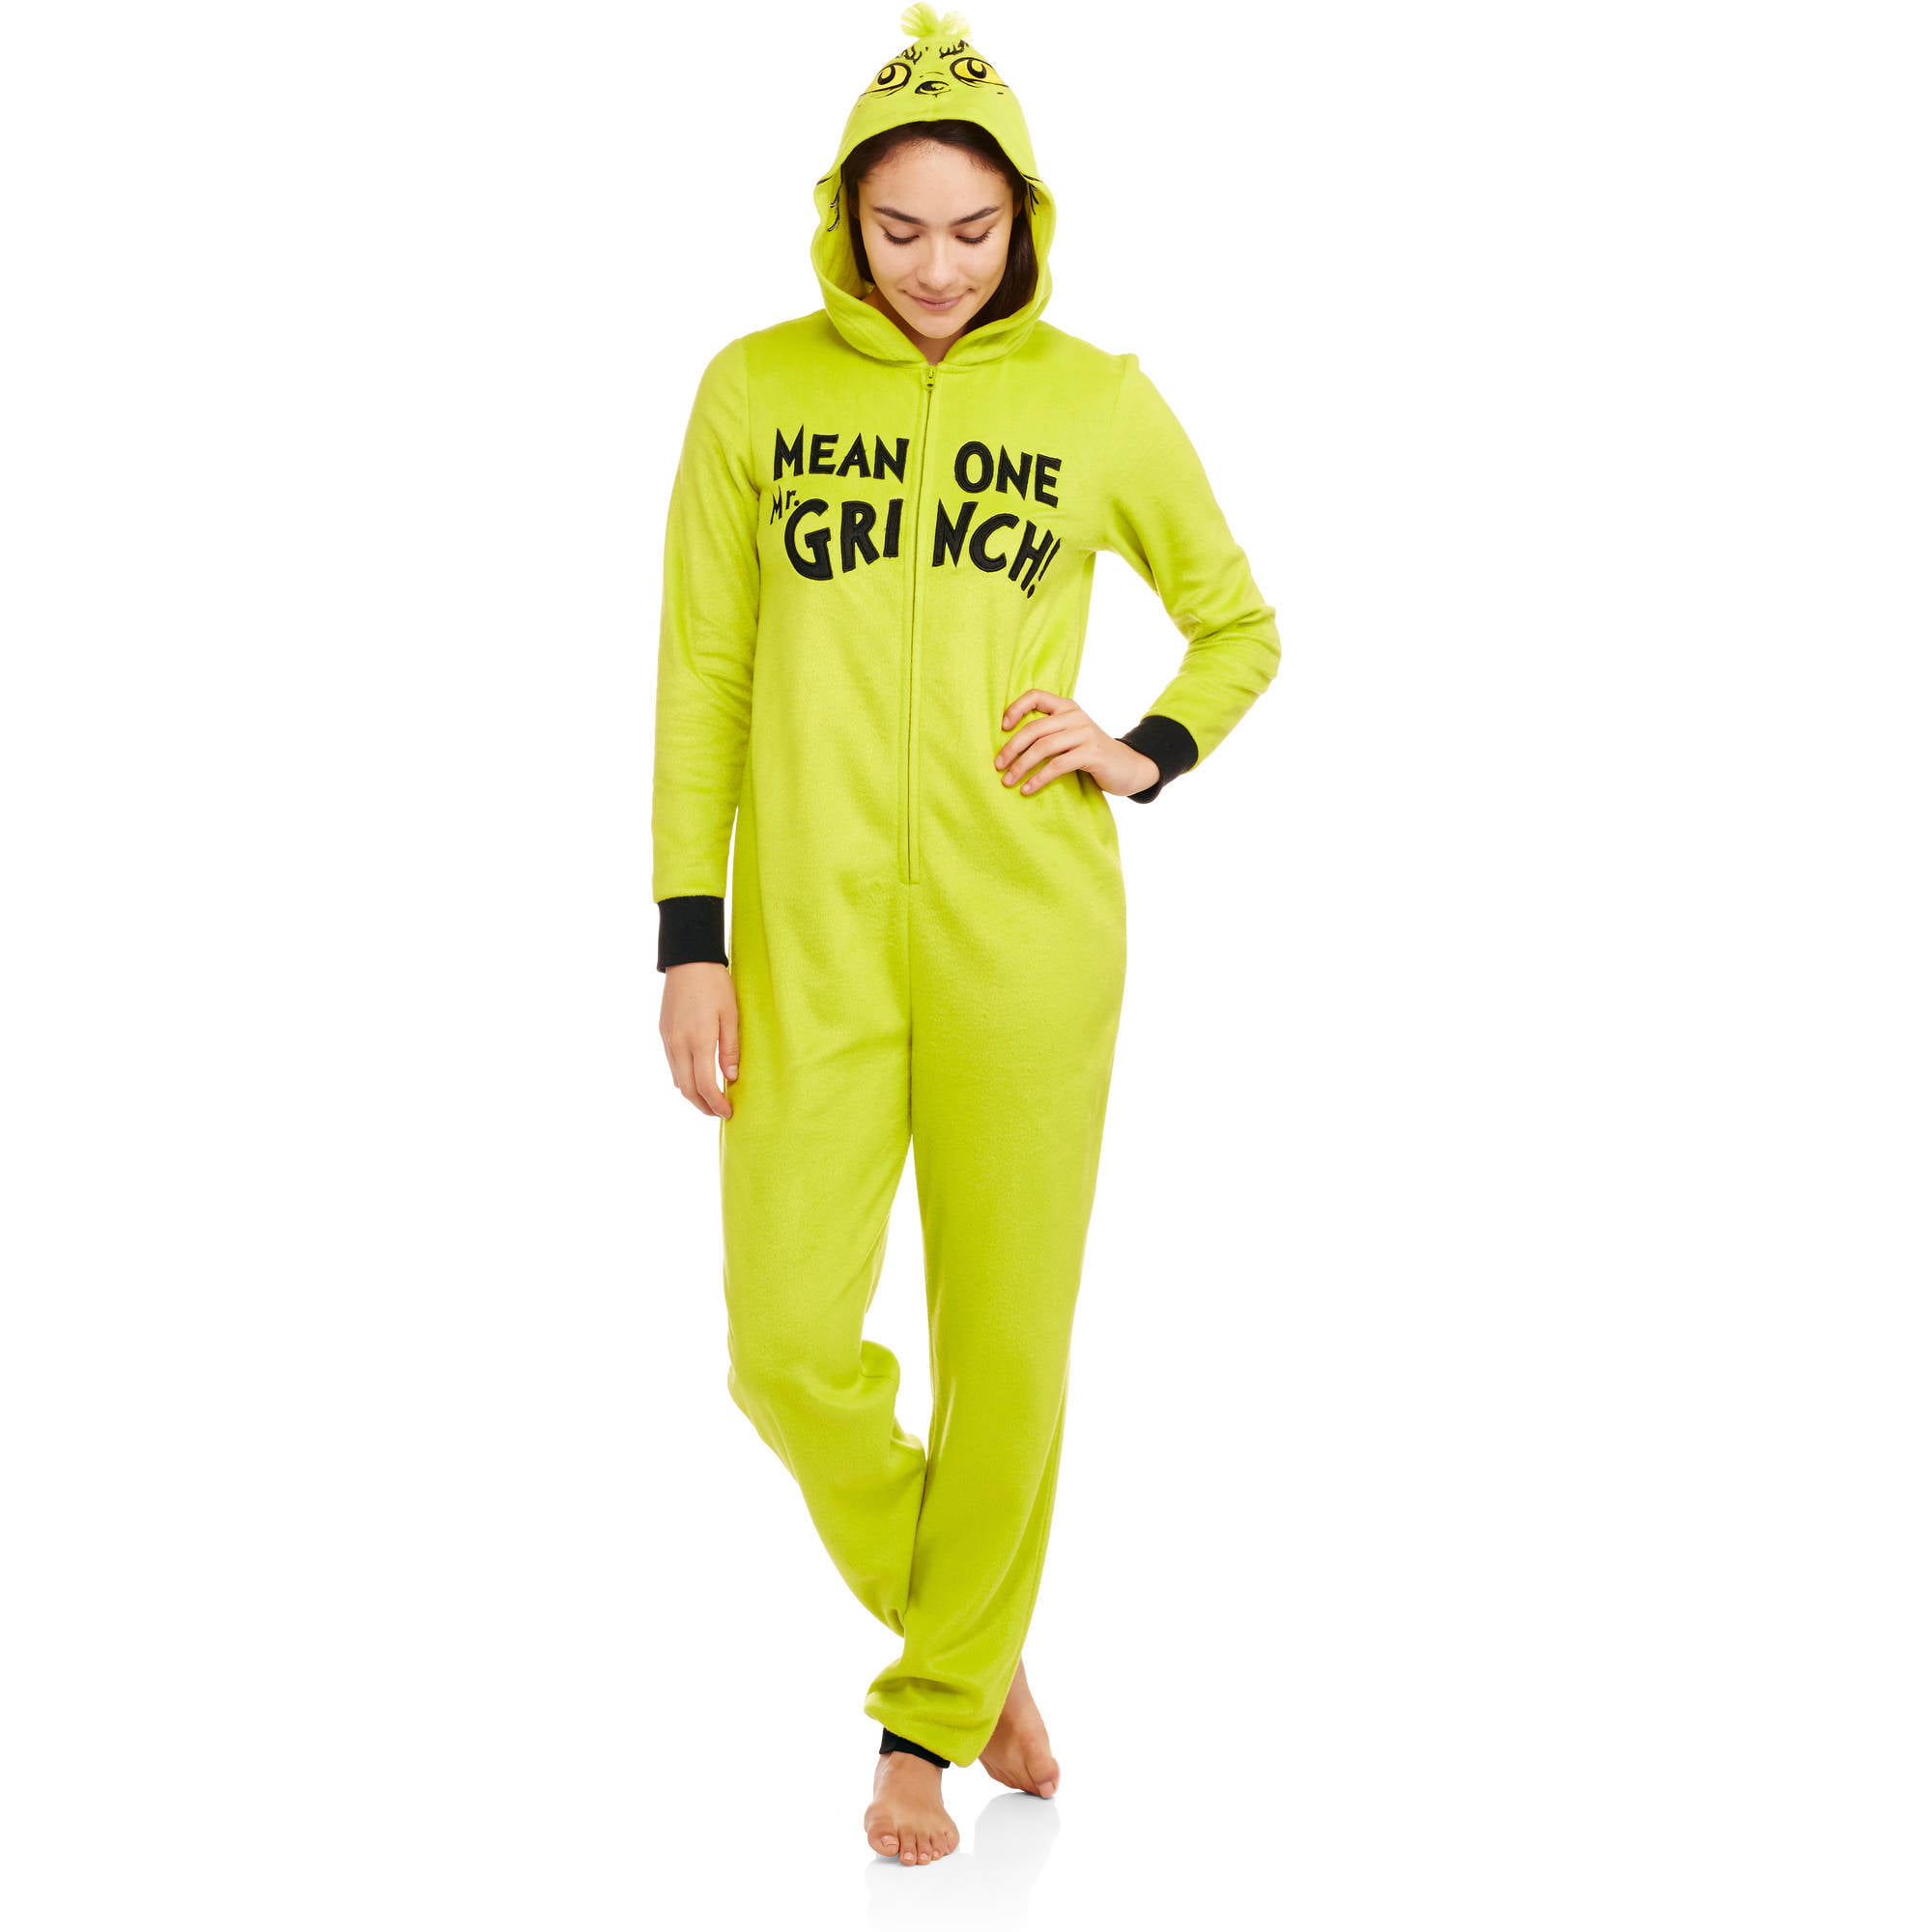 Grinch Women's Sleepwear Adult Onesie Costume Union Suit Pajama